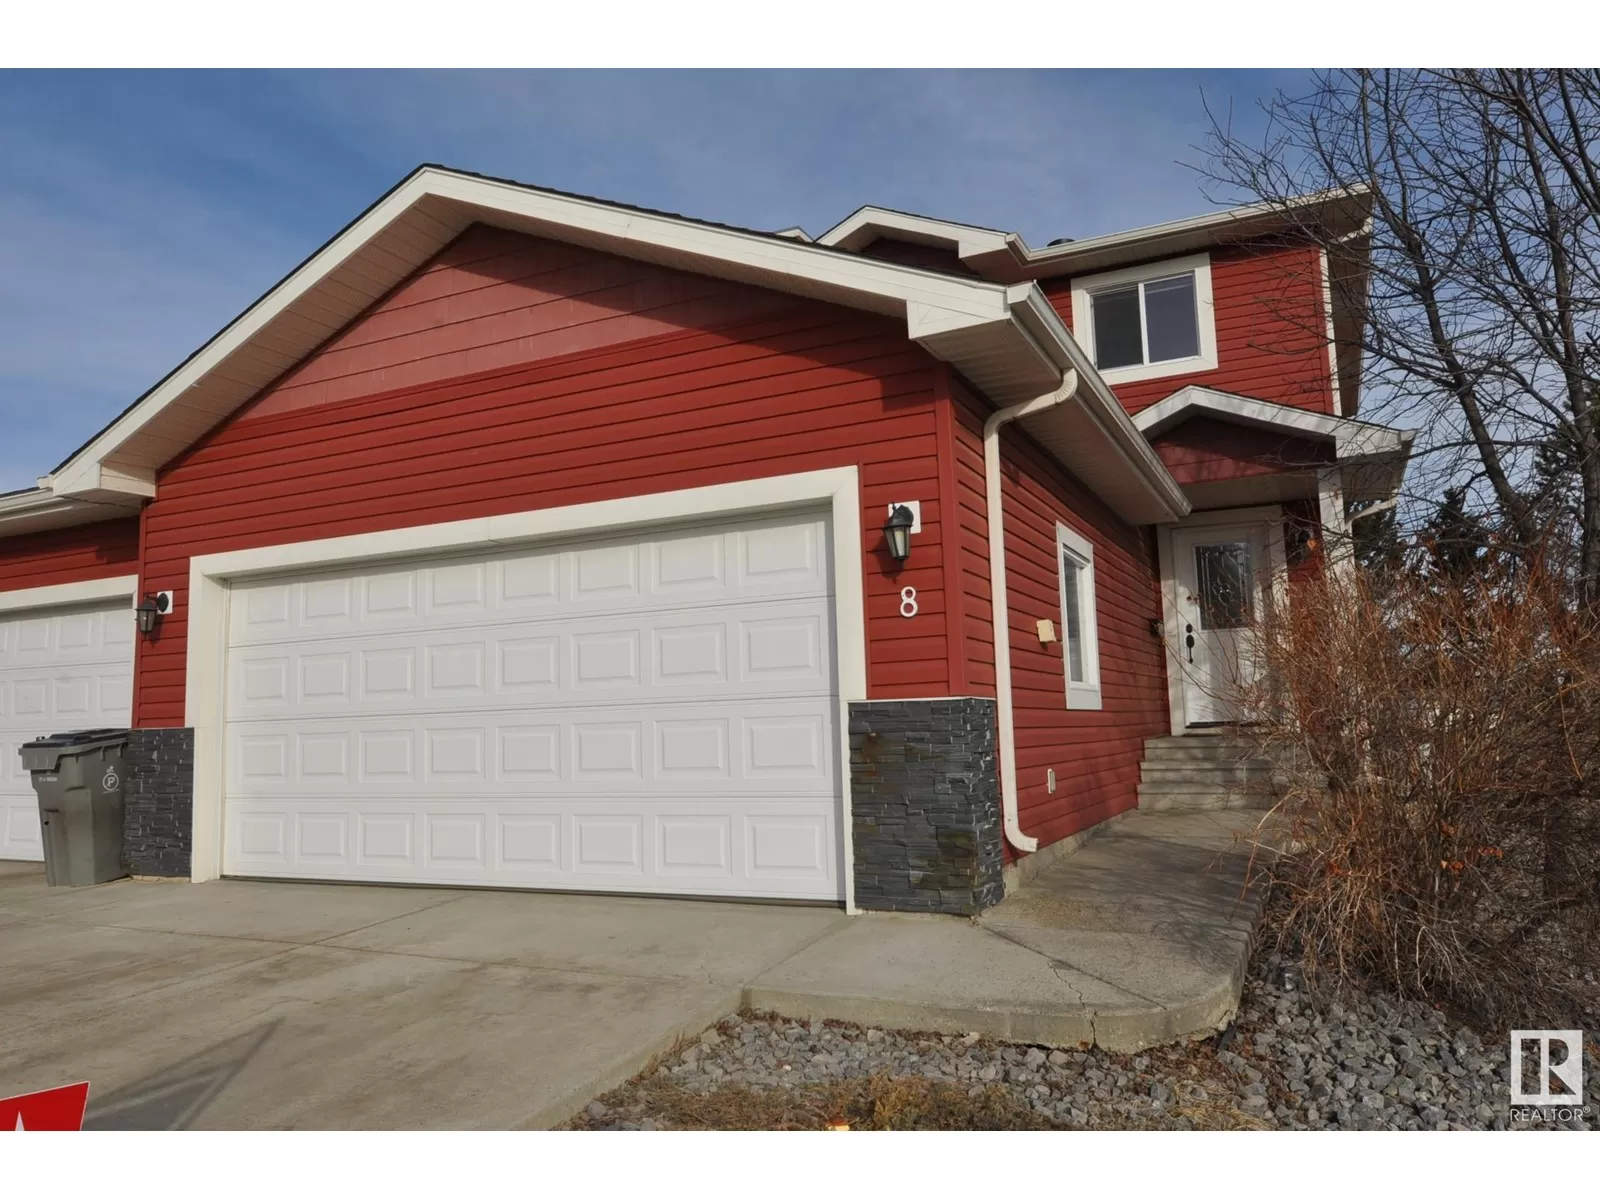 Duplex for rent: #8 520 Sunnydale Rd, Morinville, Alberta T8R 0C2